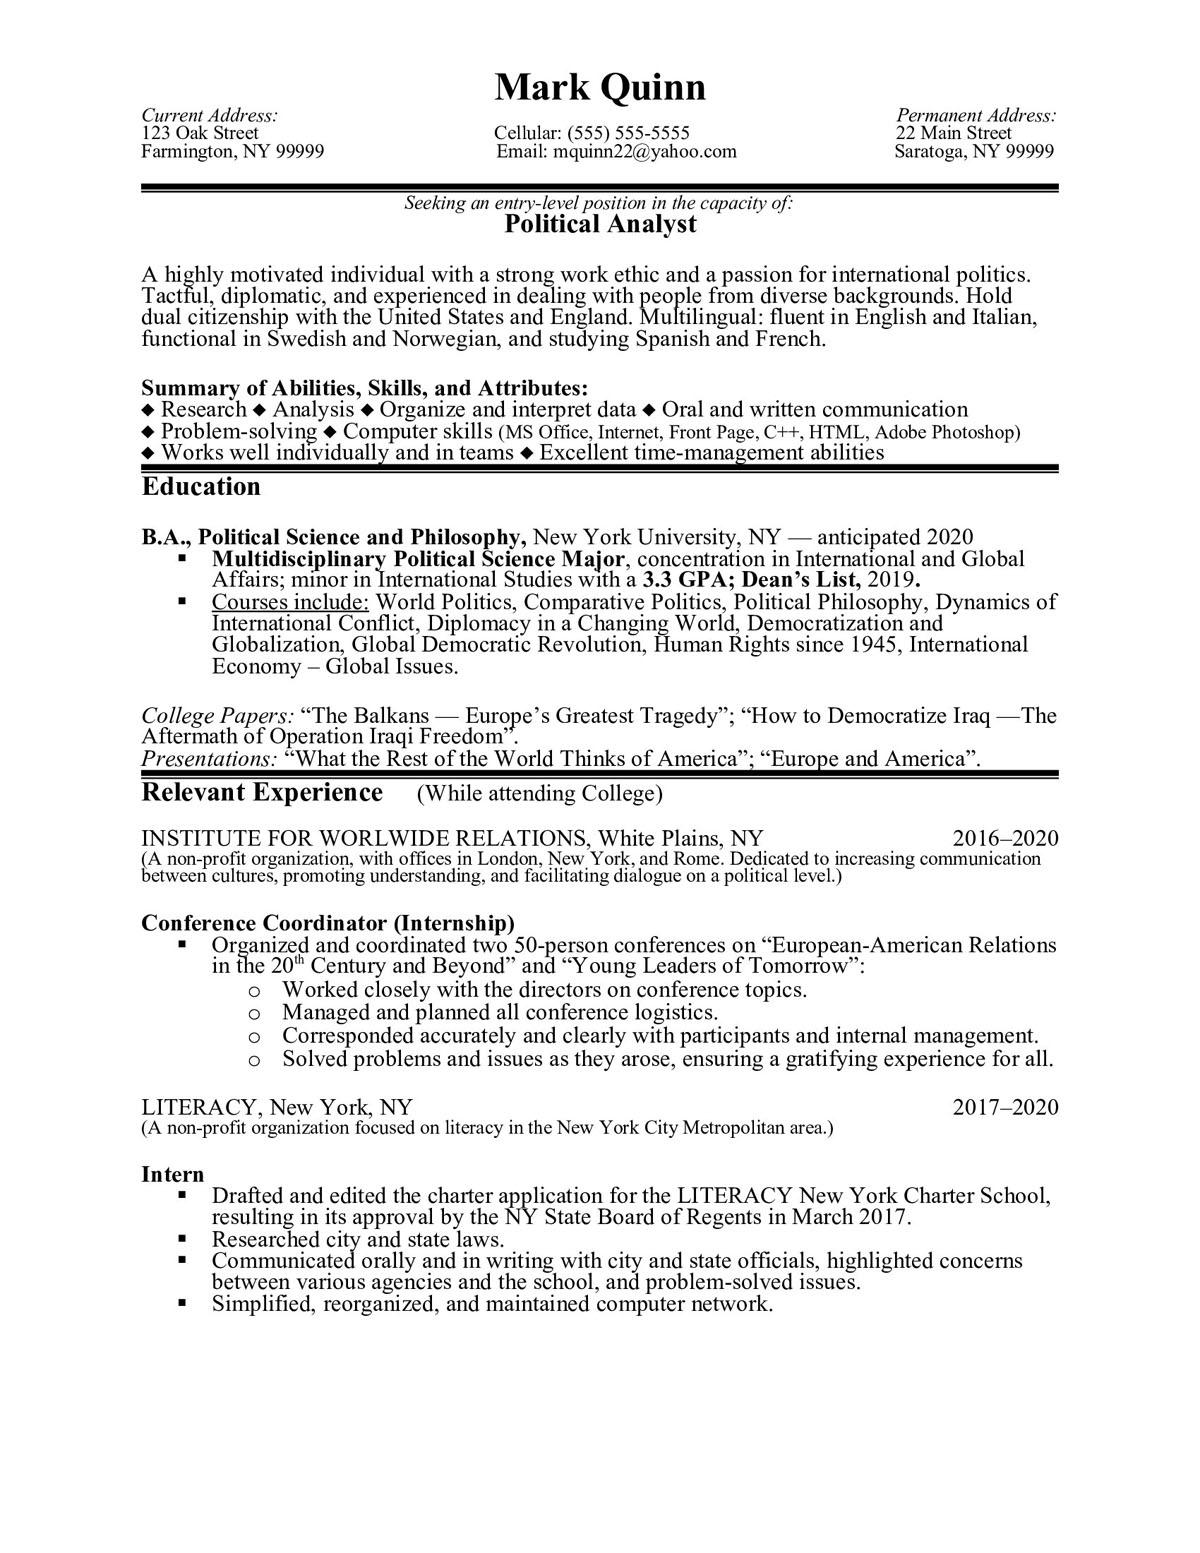 Sample resume: Political Science, Entry Level, Chronological